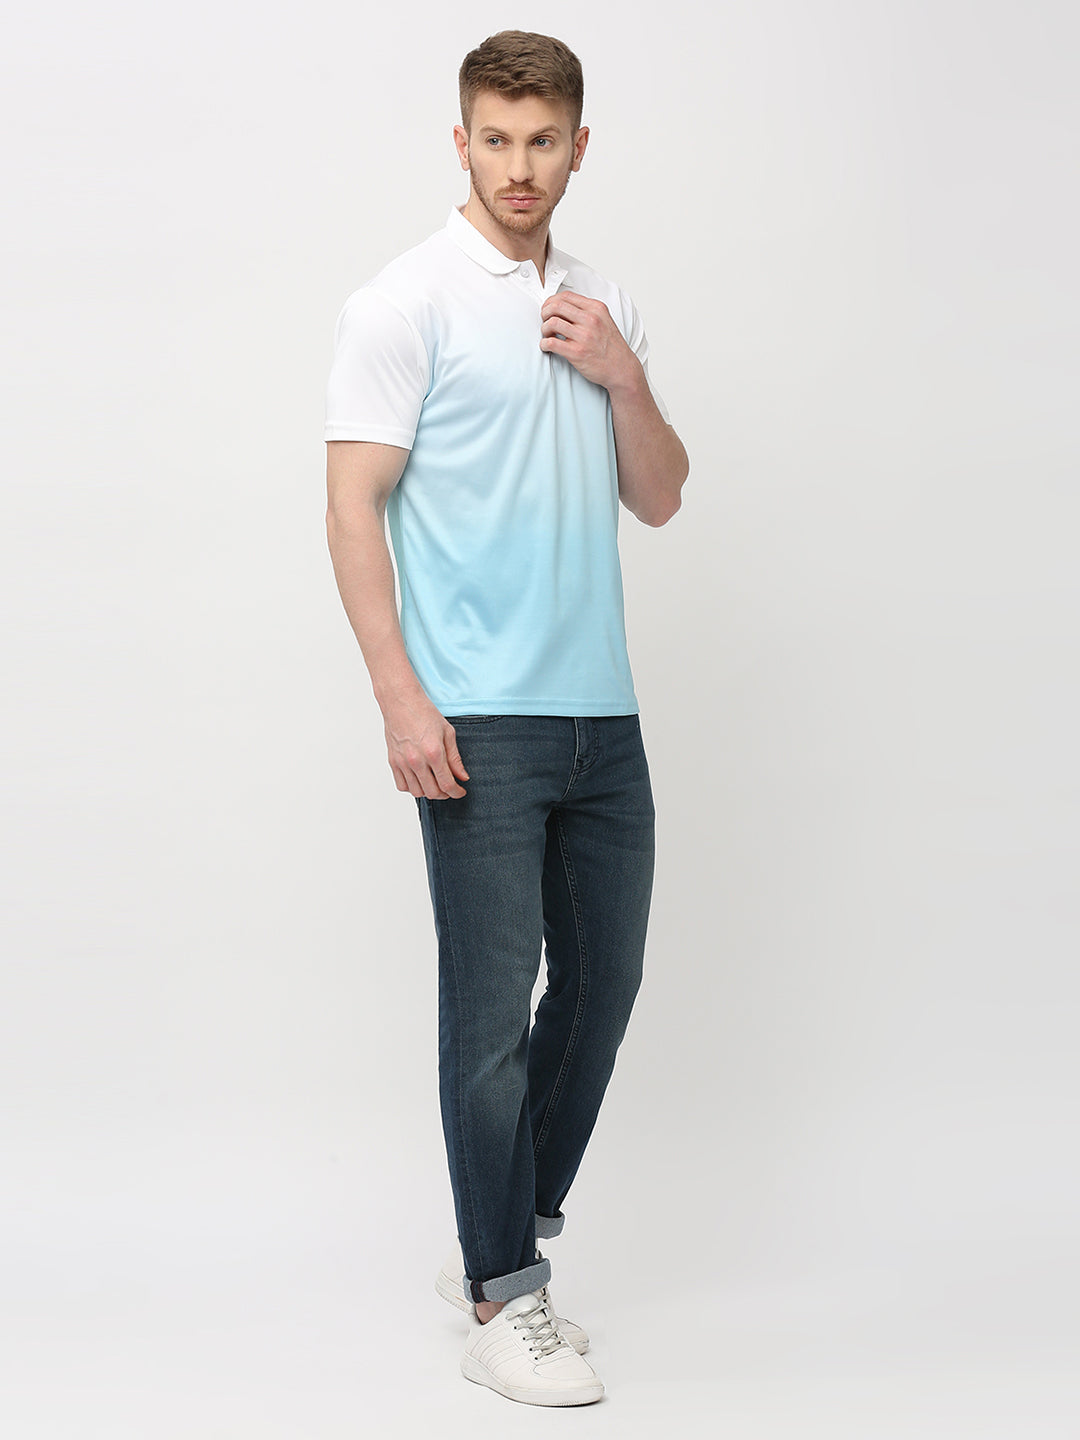 Polo T-shirt (Ombre) - Blue